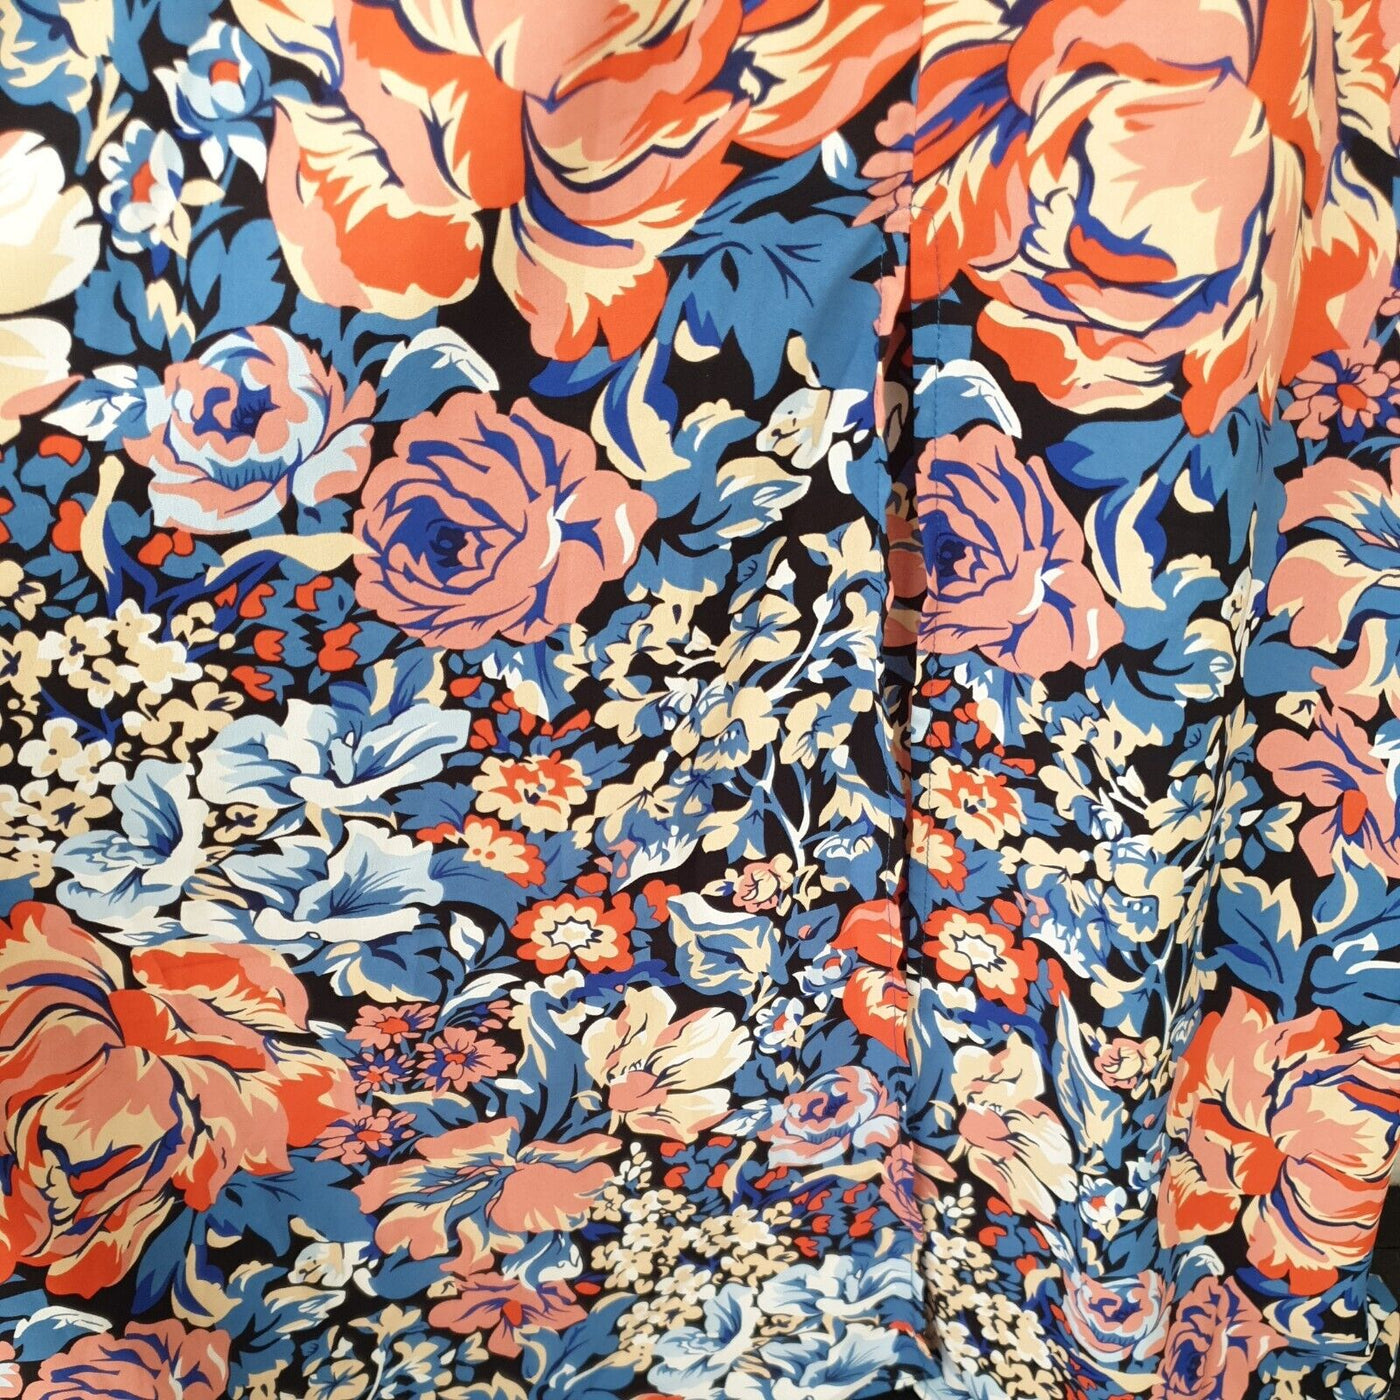 Quiz Coral & Blue Midi Dress With Slit Size 18 ****Ref V507